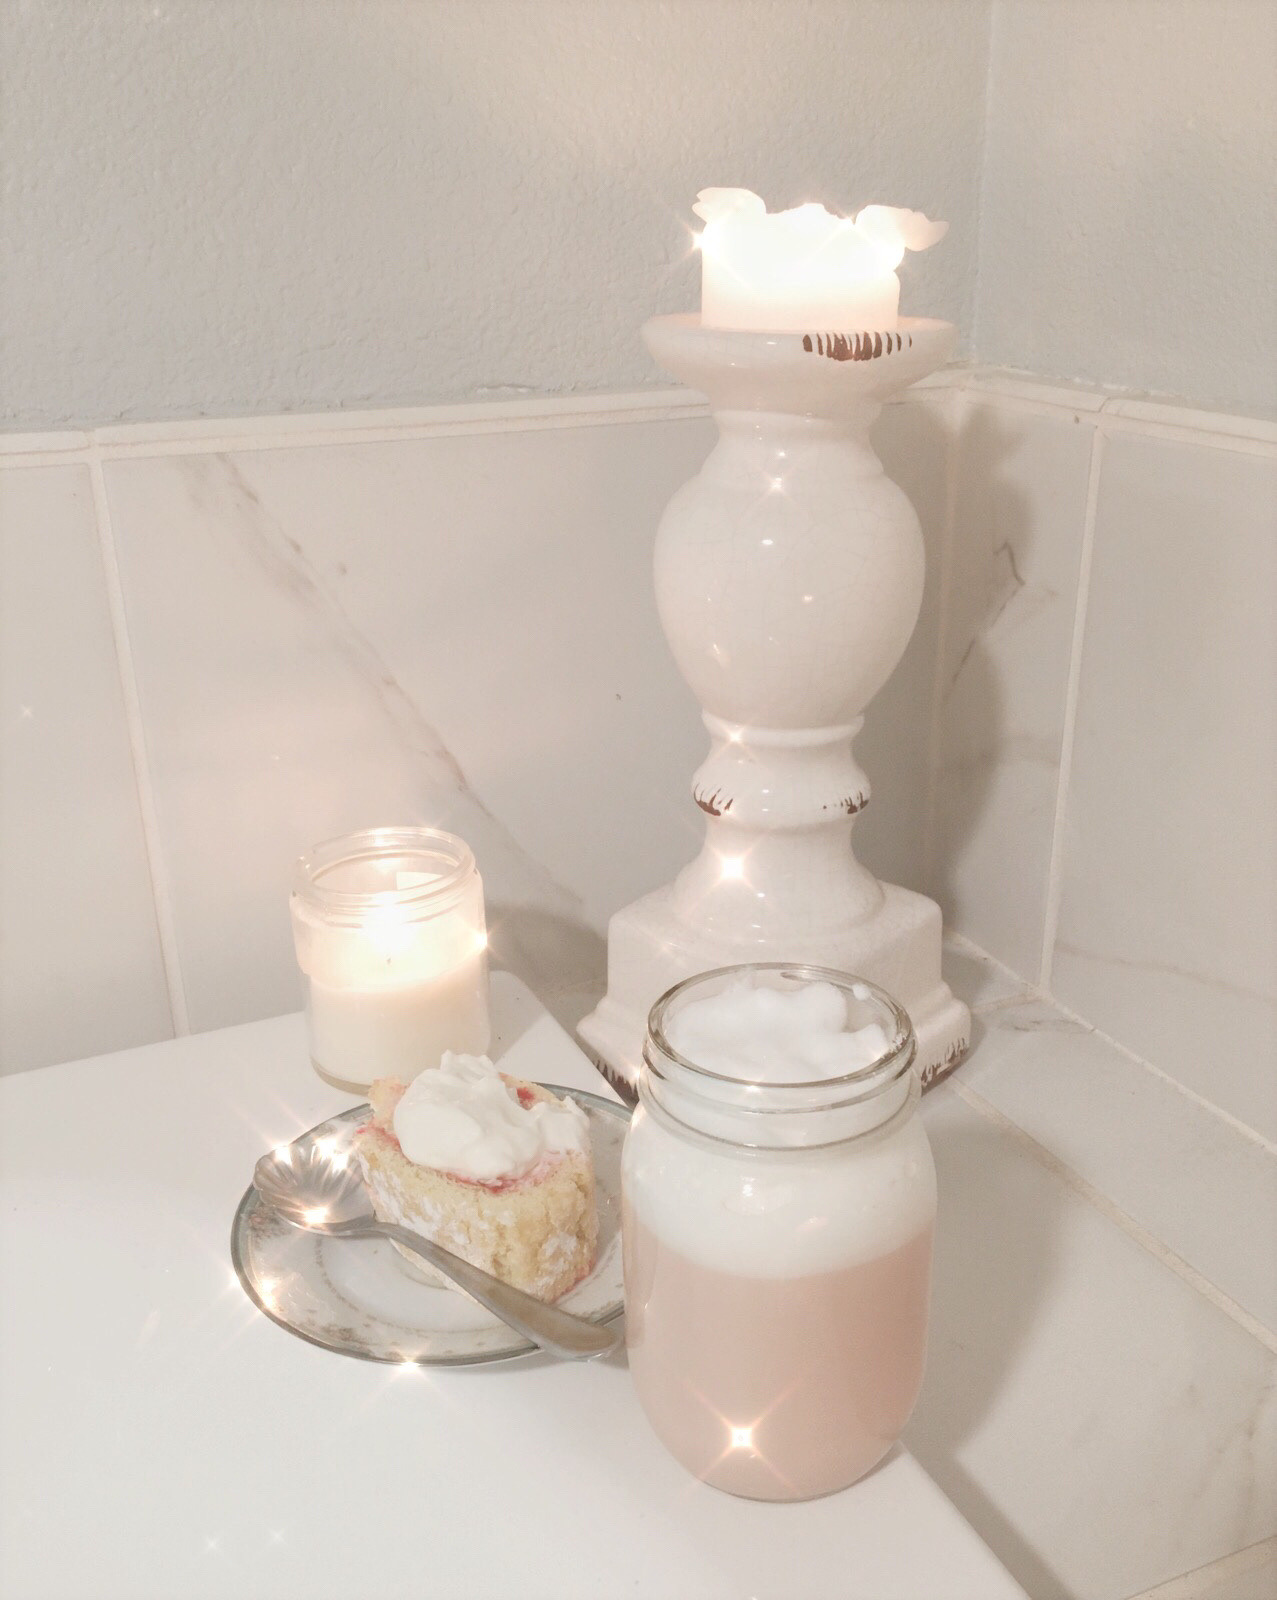 my-darling-boy:For the full moon, I did a rose strawberry milk bath, lit my tea cake